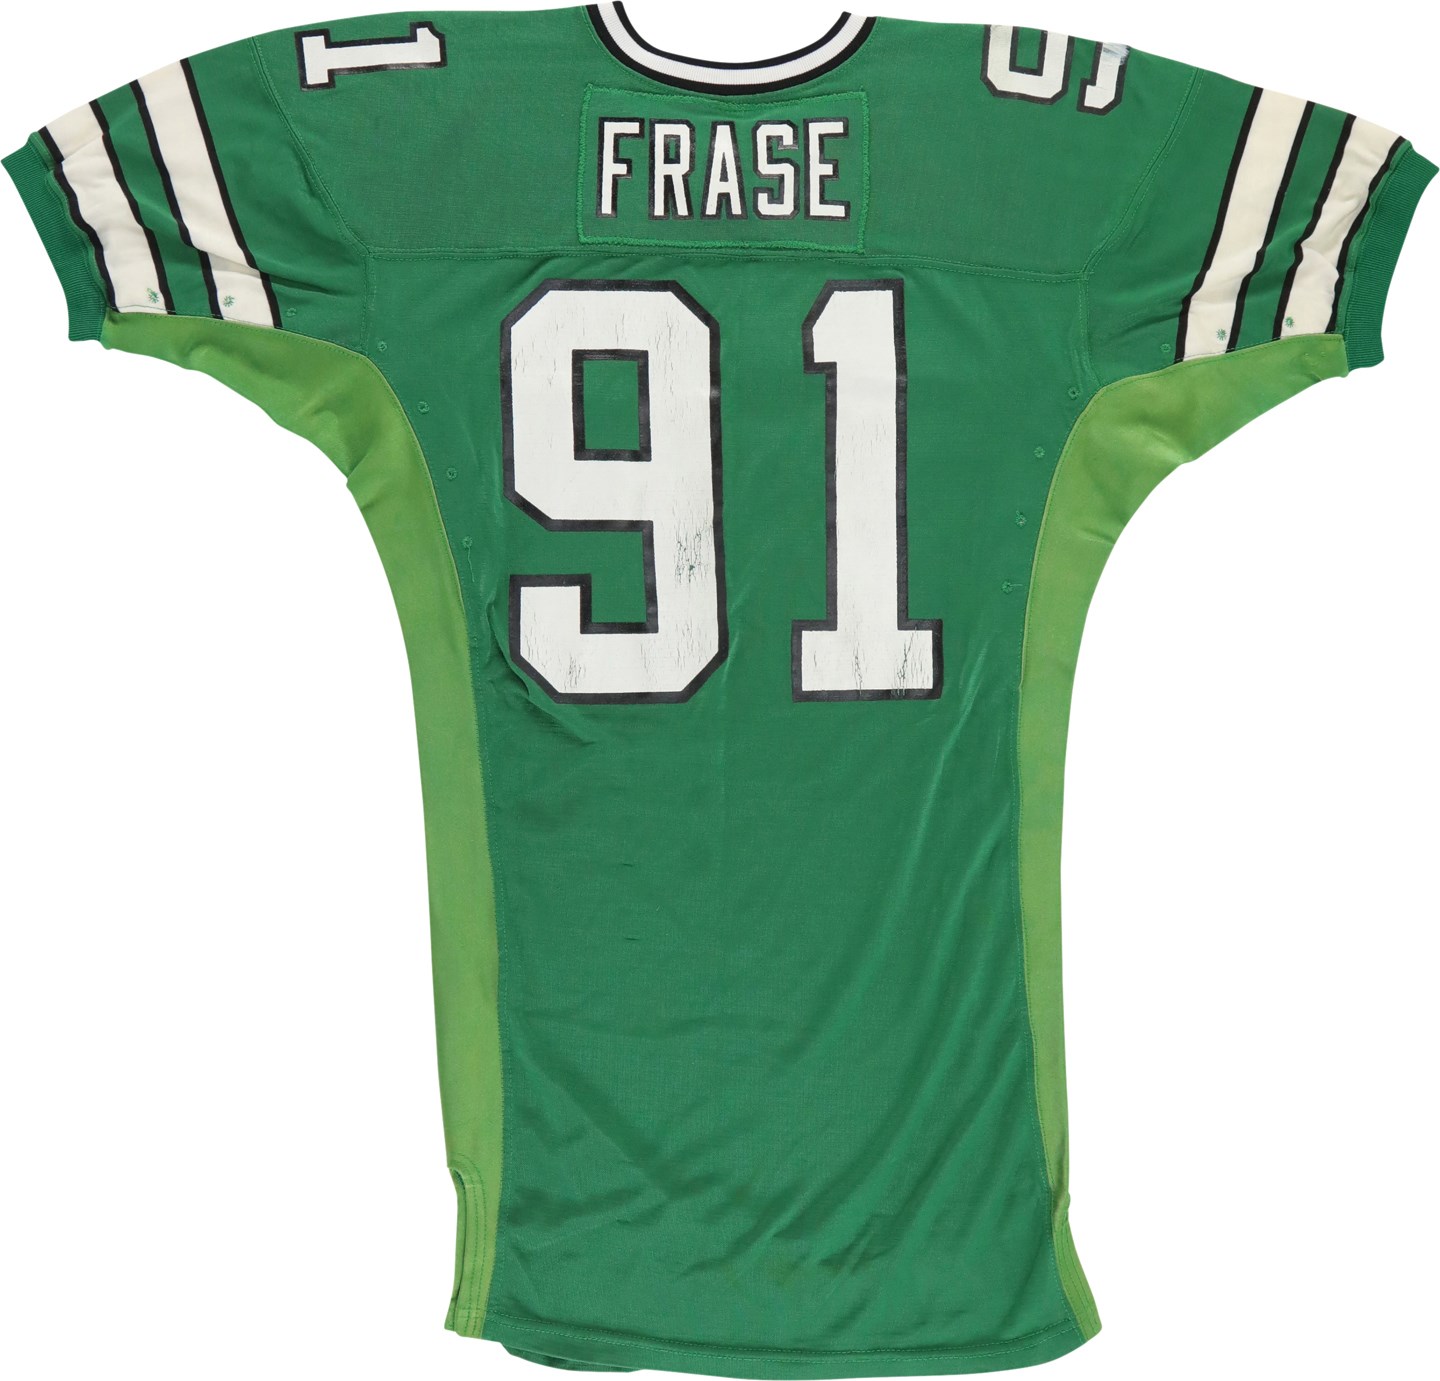 - Circa 1990 Paul Frase New York Jets Game Worn Jersey